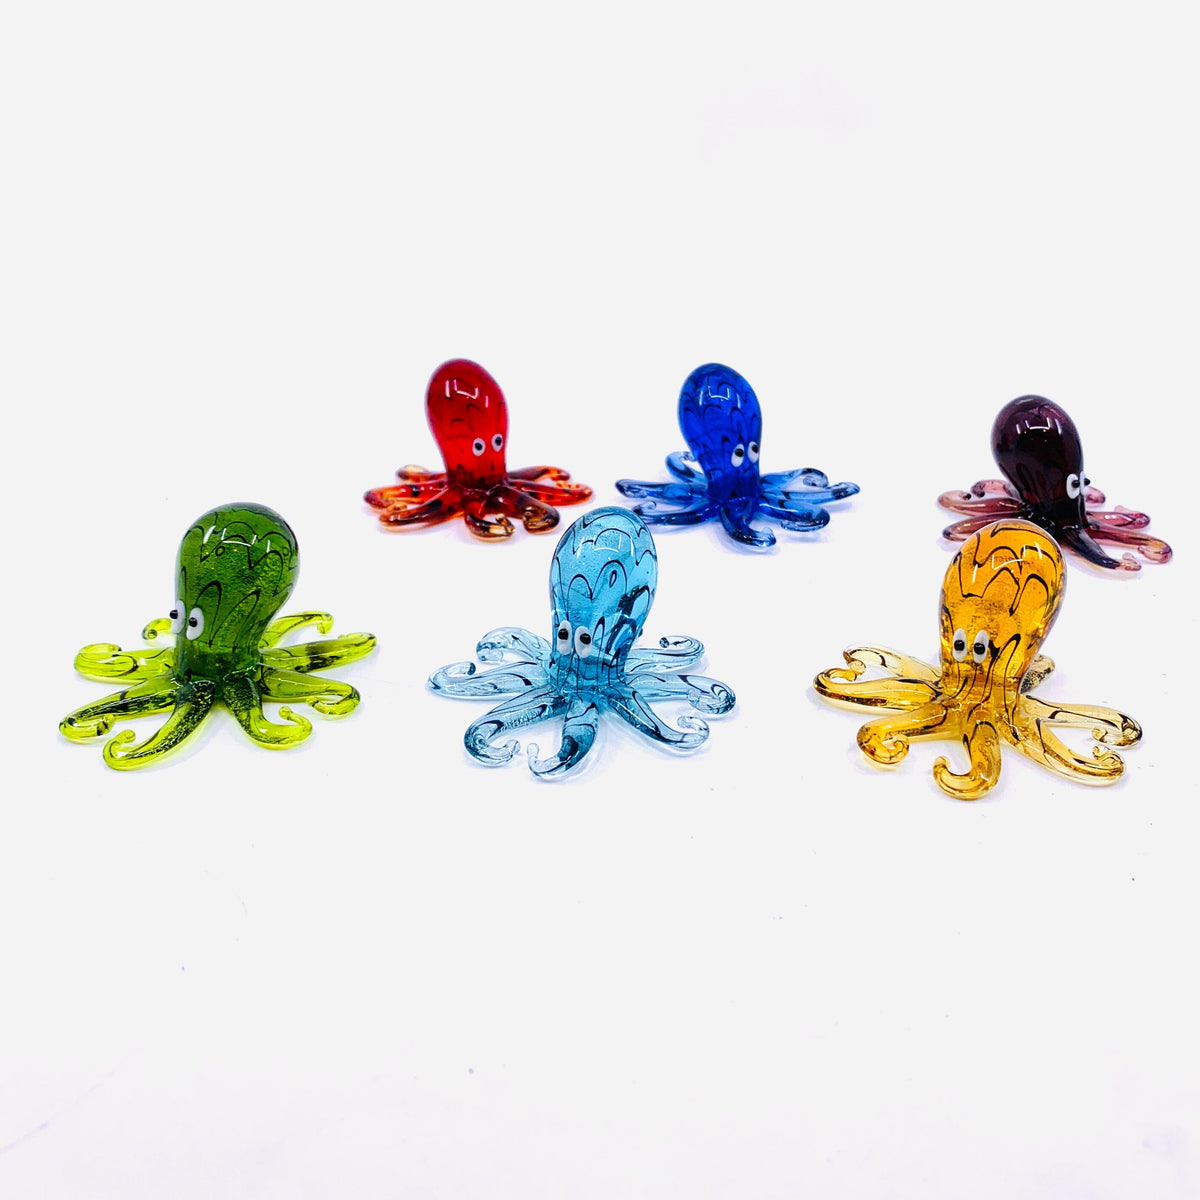 Glass Octopus, Gold Miniature Chesapeake Bay 